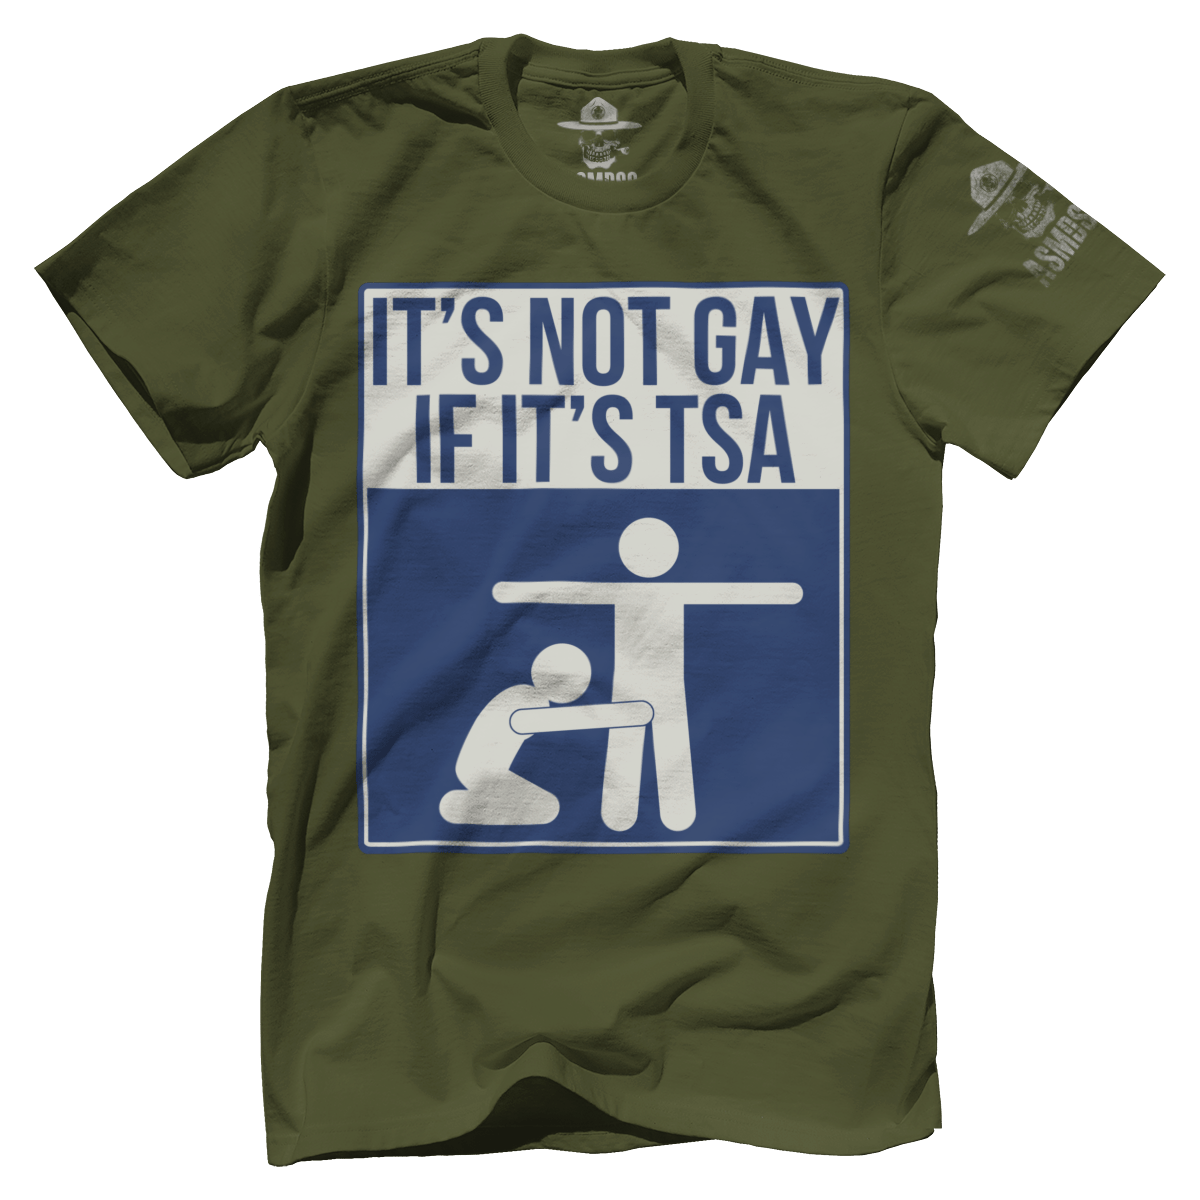 Not Gay If Its TSA